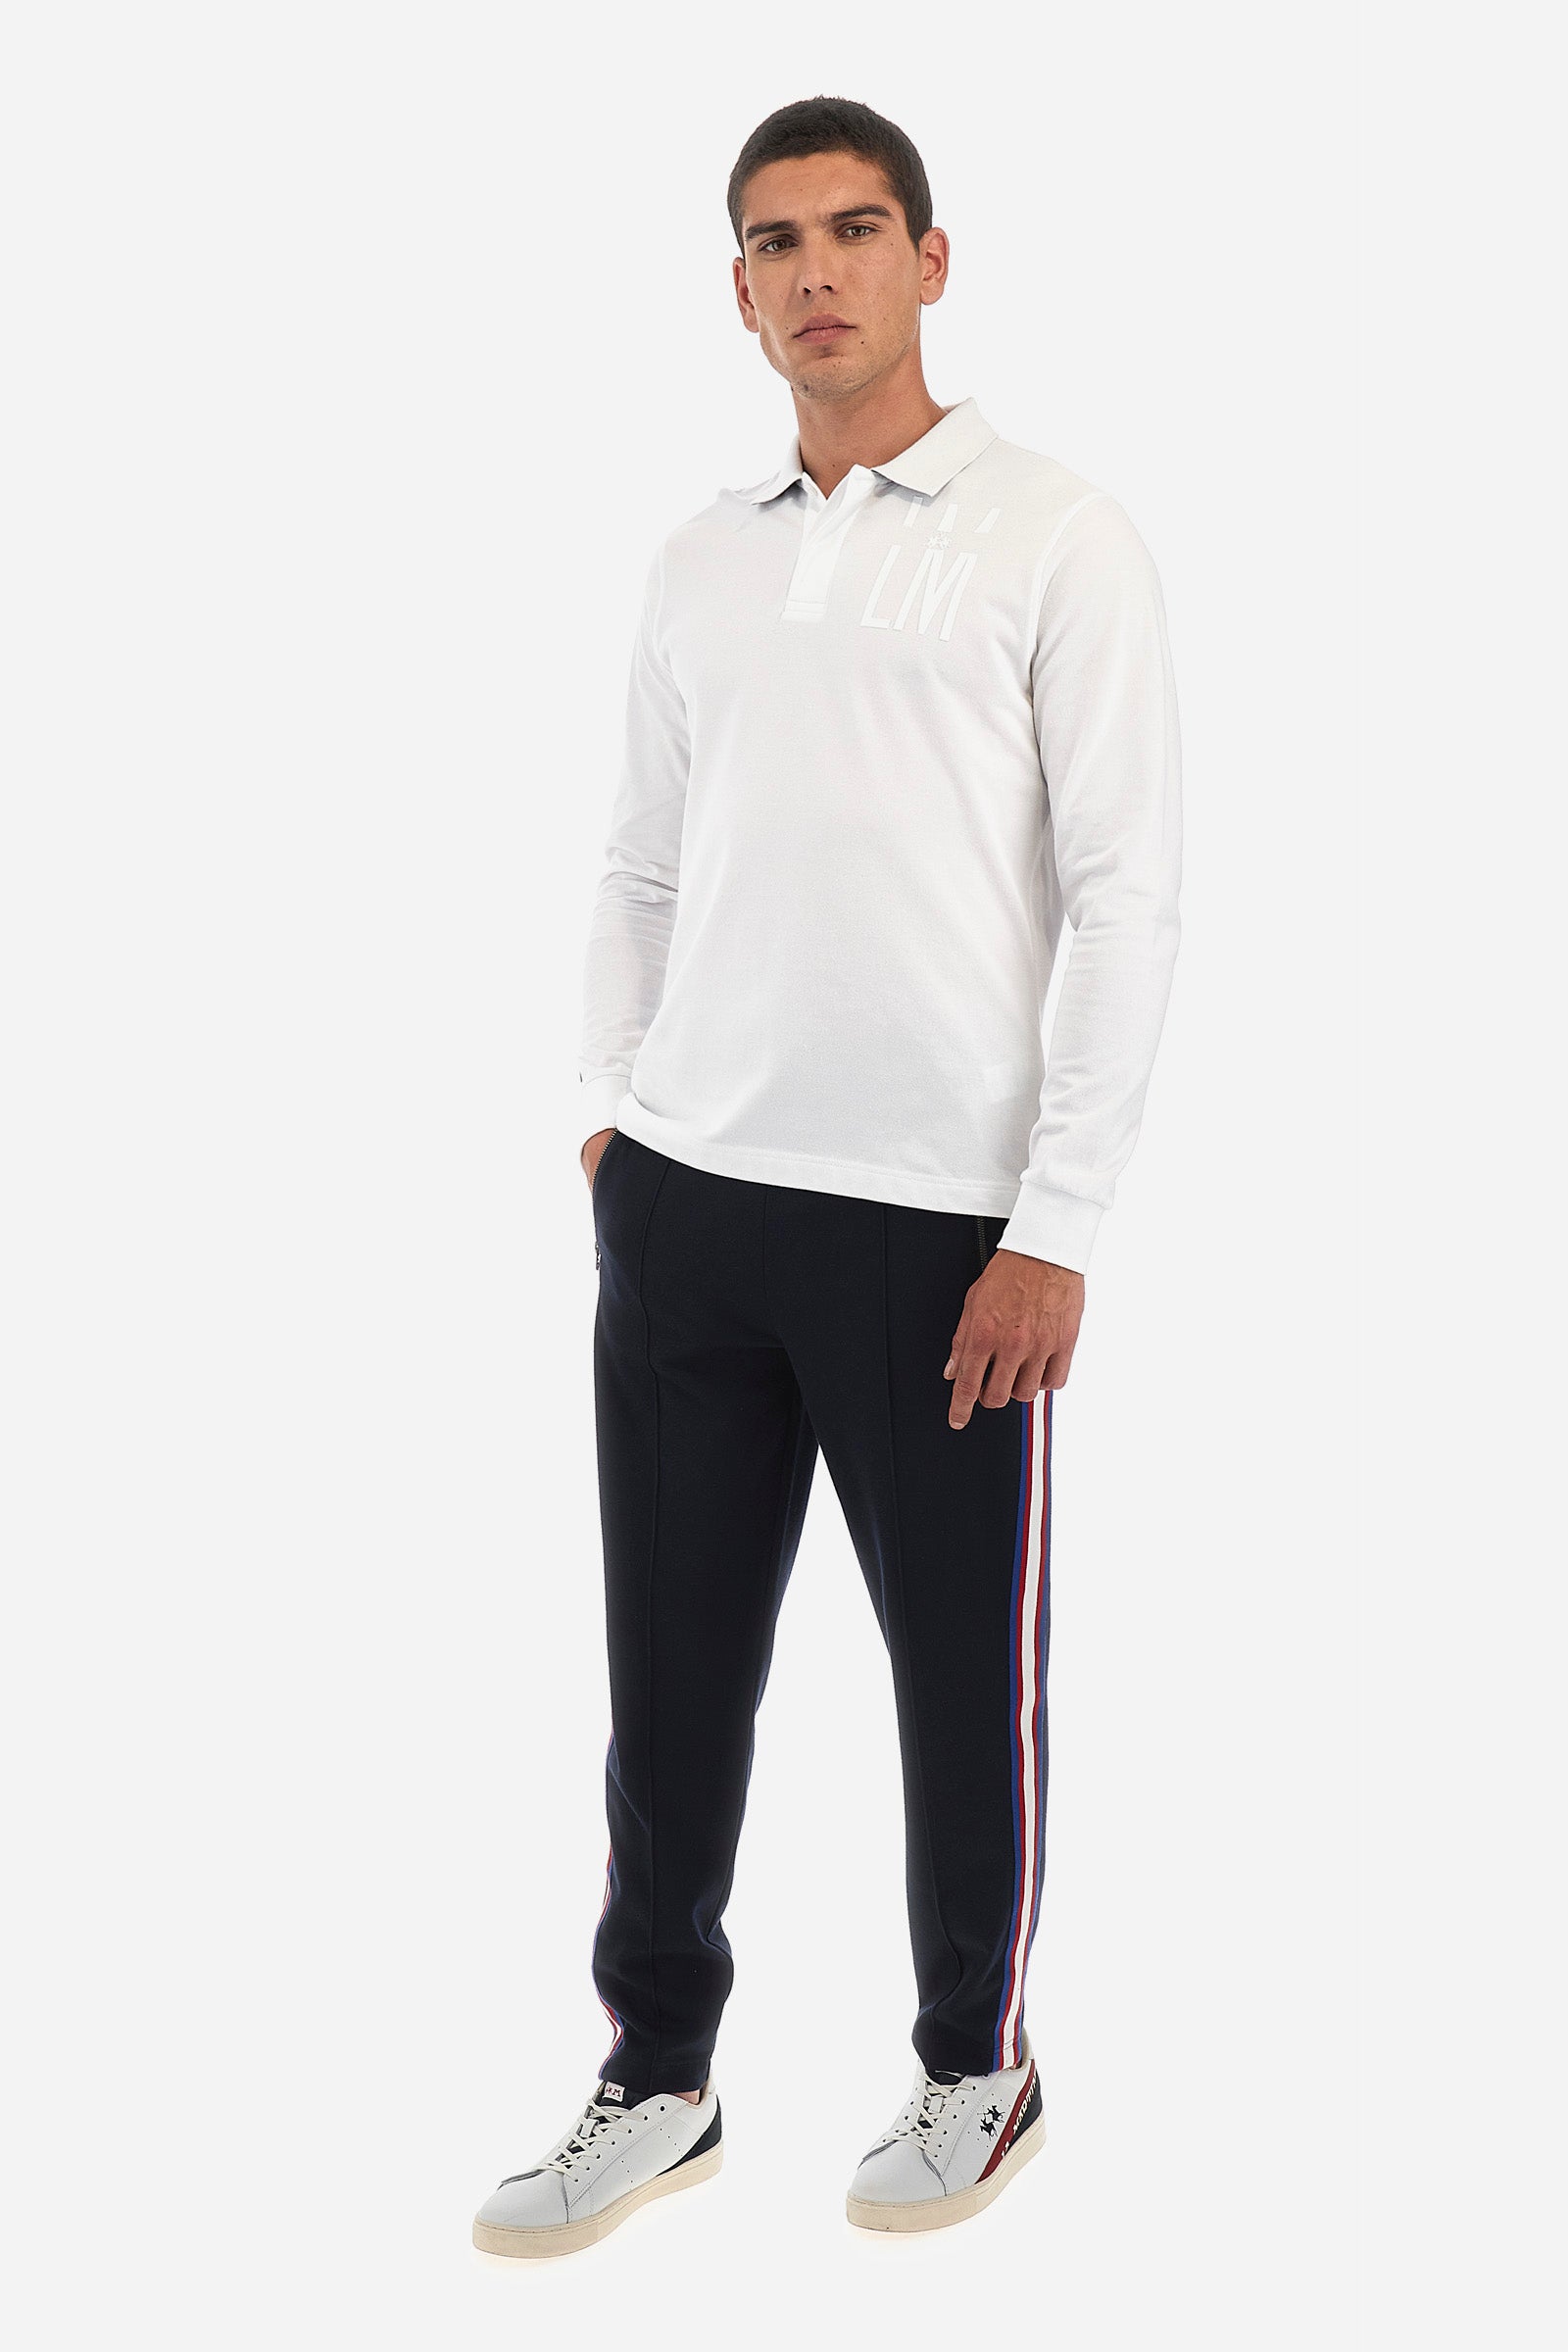 Pantaloni jogging uomo regular fit - Wescott - Navy